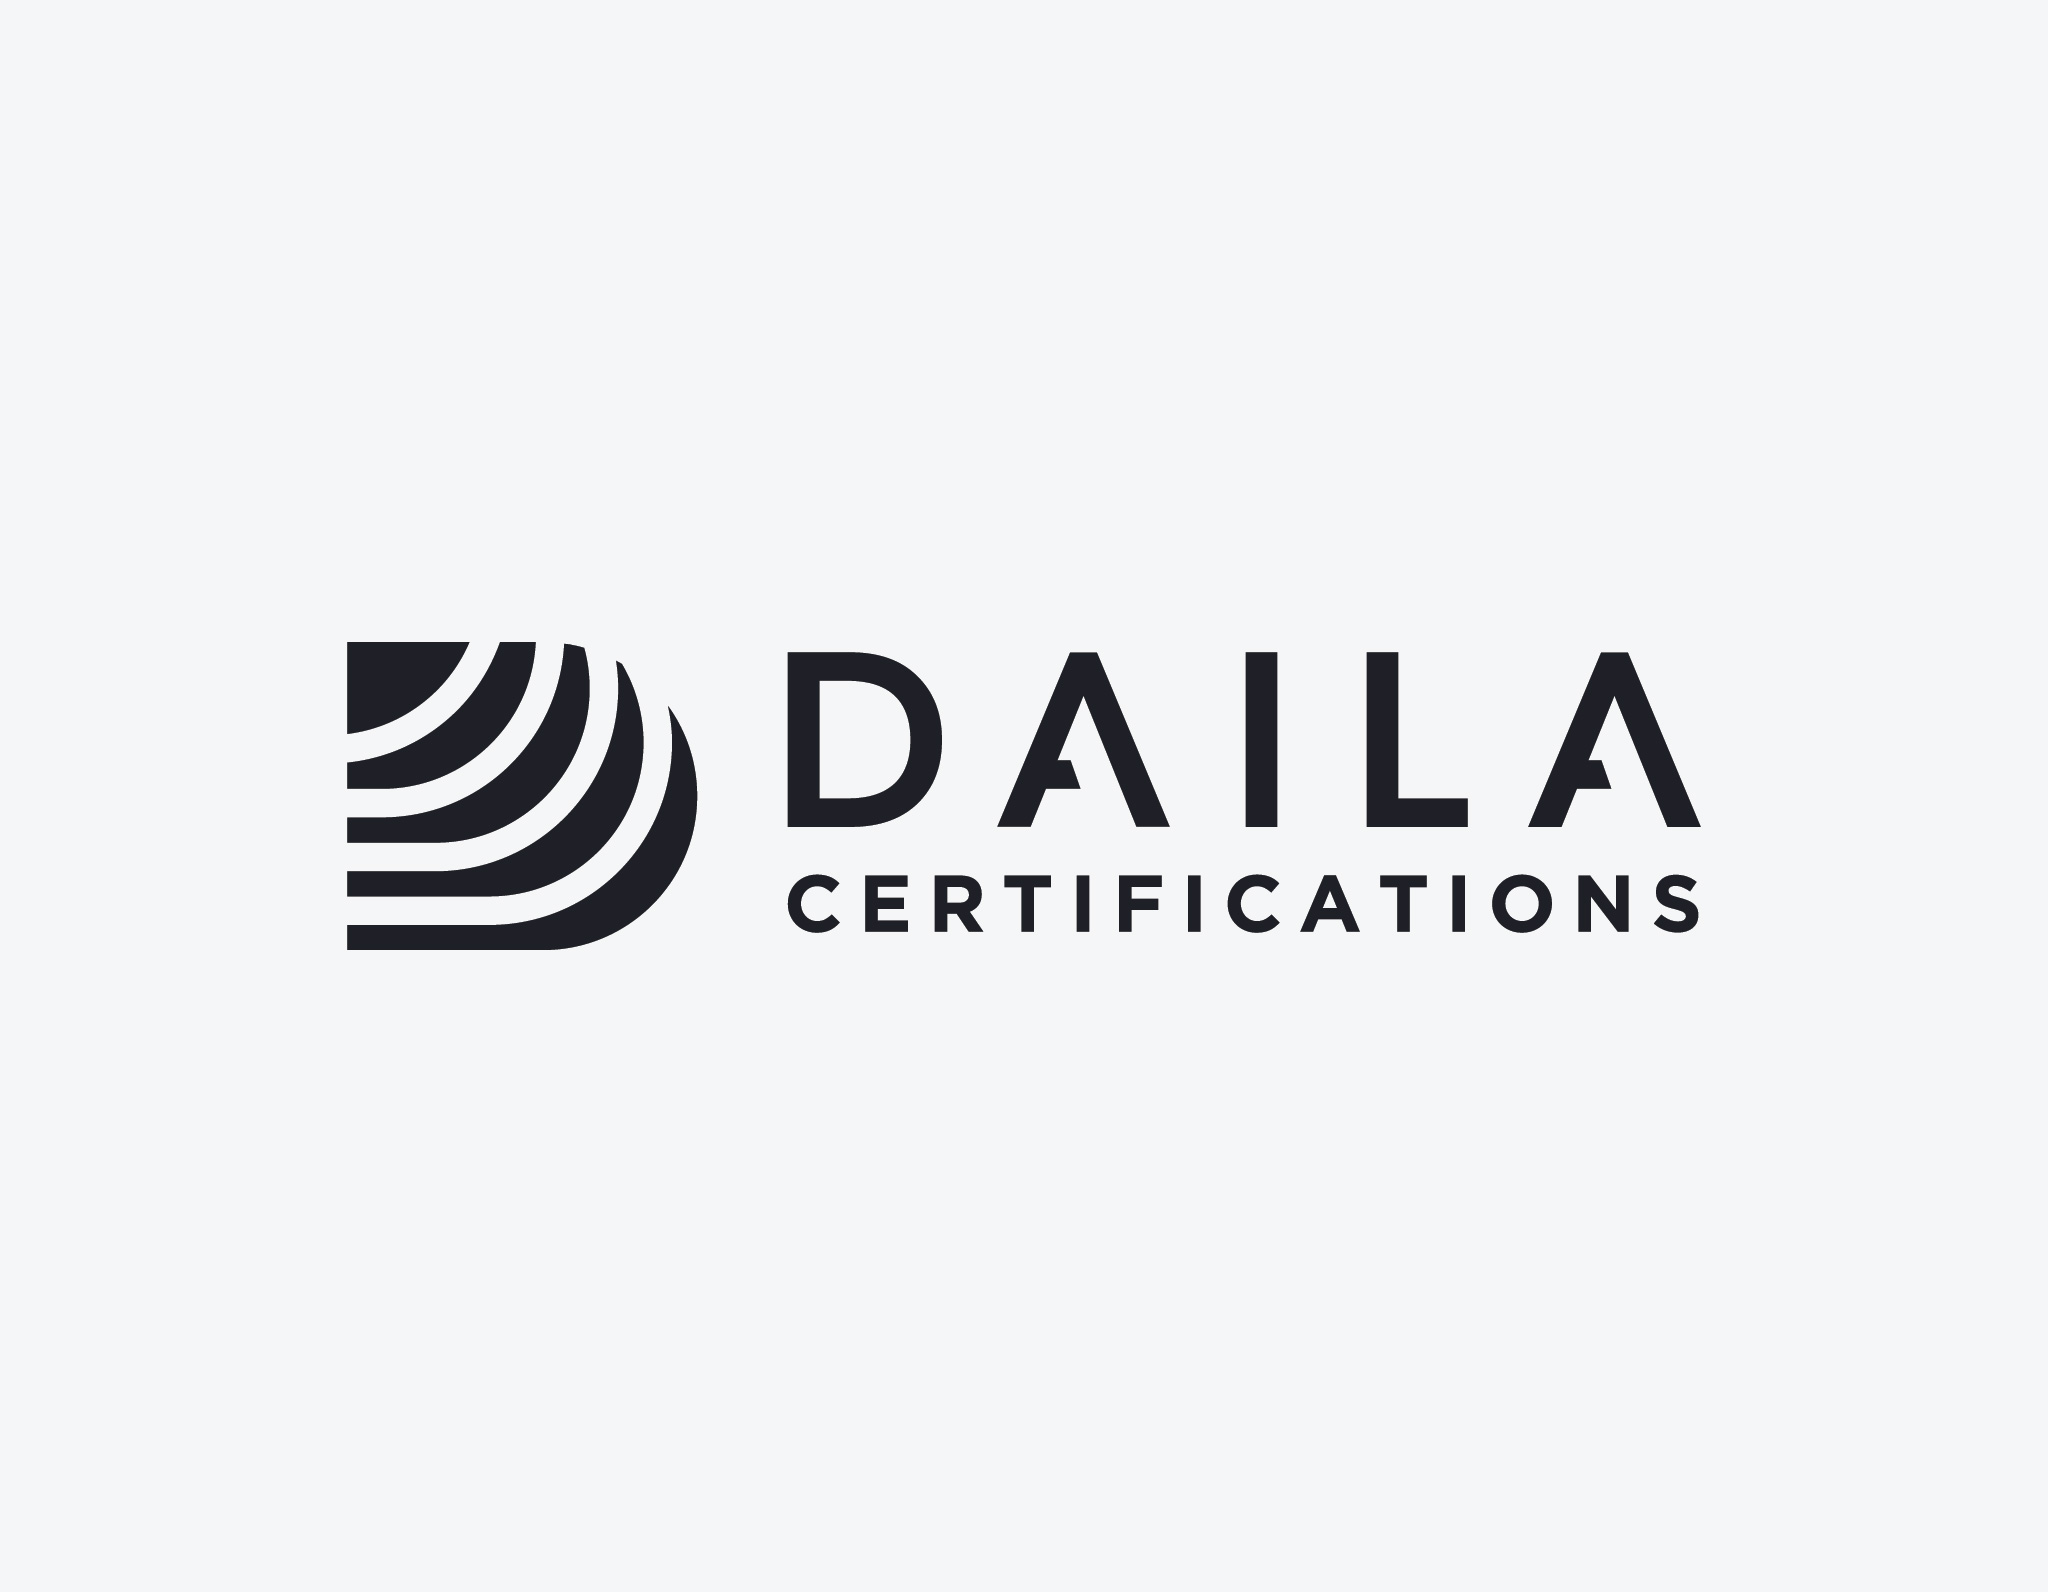 Daila Certifications logo